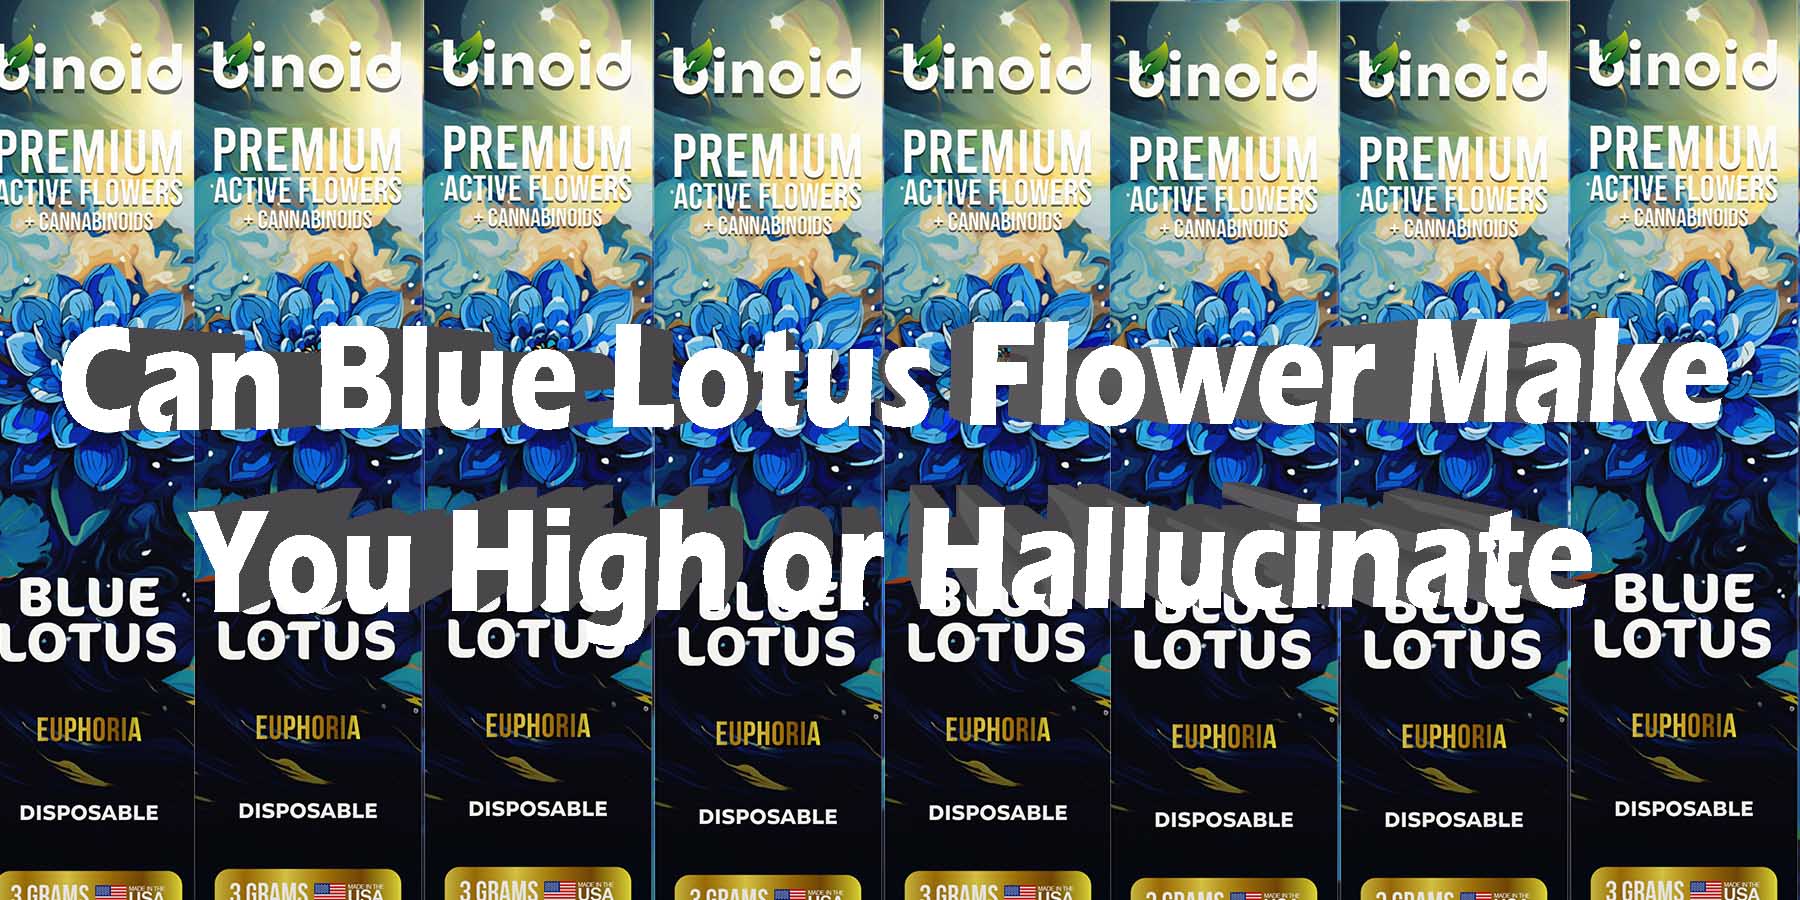 Can Blue Lotus Flower Make You High or Hallucinate WhereToBuy HowToBuy StrongestBrand BestBrand Discount SmokeShop Mushrooms StrongDisposable BrandNew Binoid